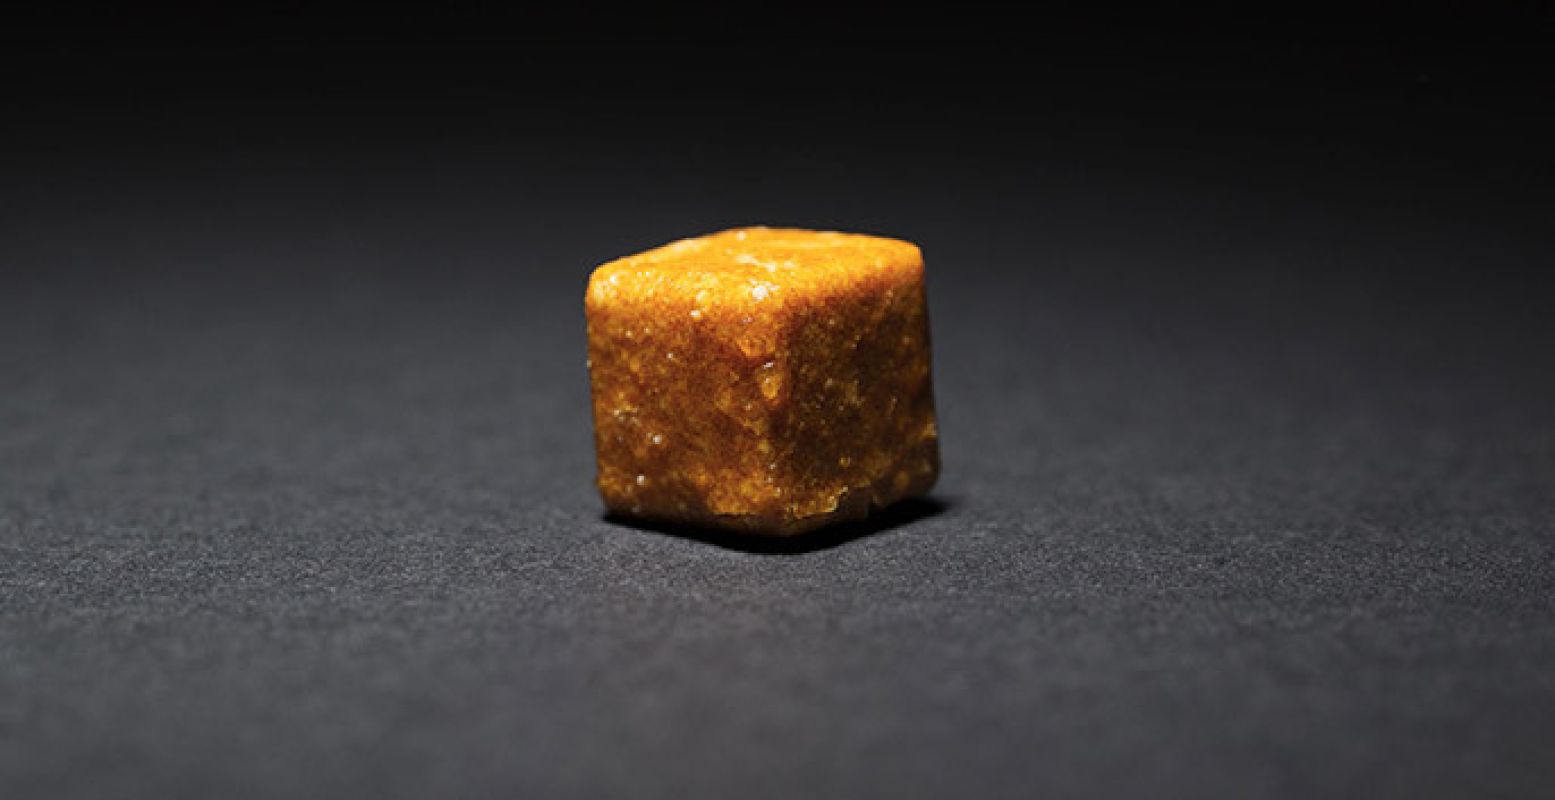 Astronautenvoedsel 'Cheese Cracker Cube', 1960-1980. (Museum Boerhaave, V16593). Foto: Marieke de Lorijn